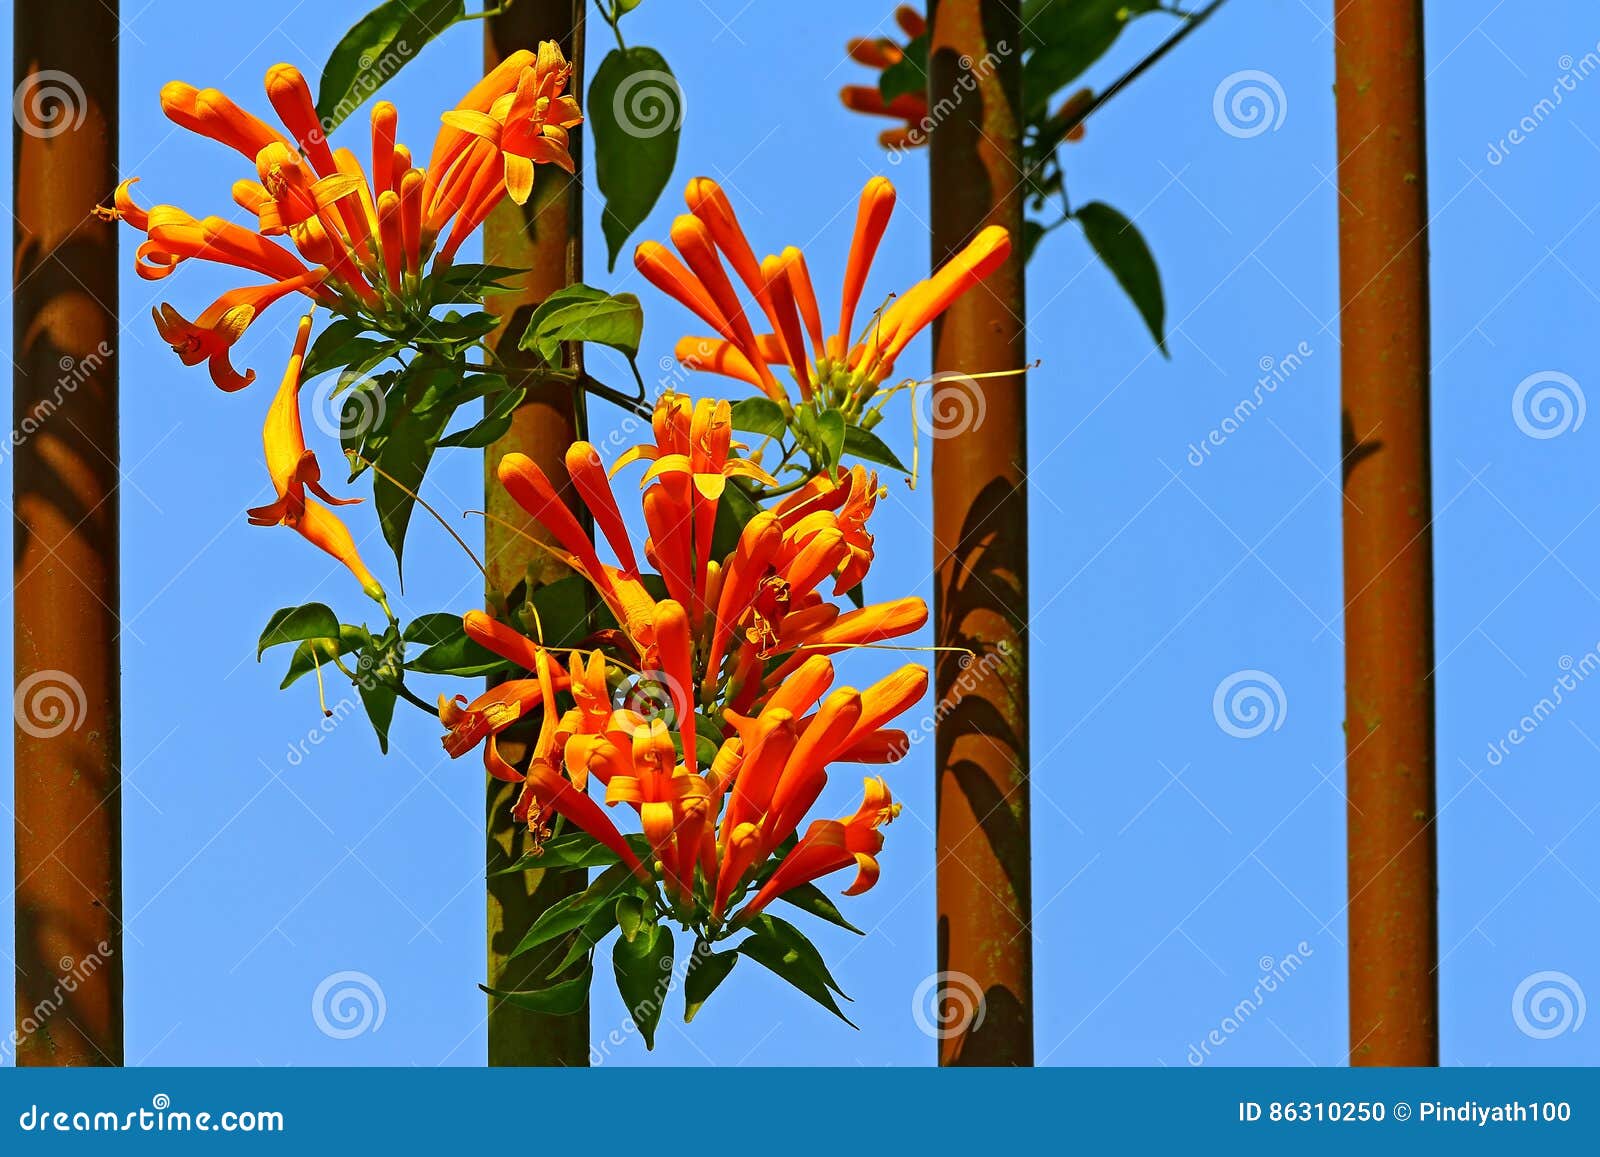 the orange trumpet creeper flowers